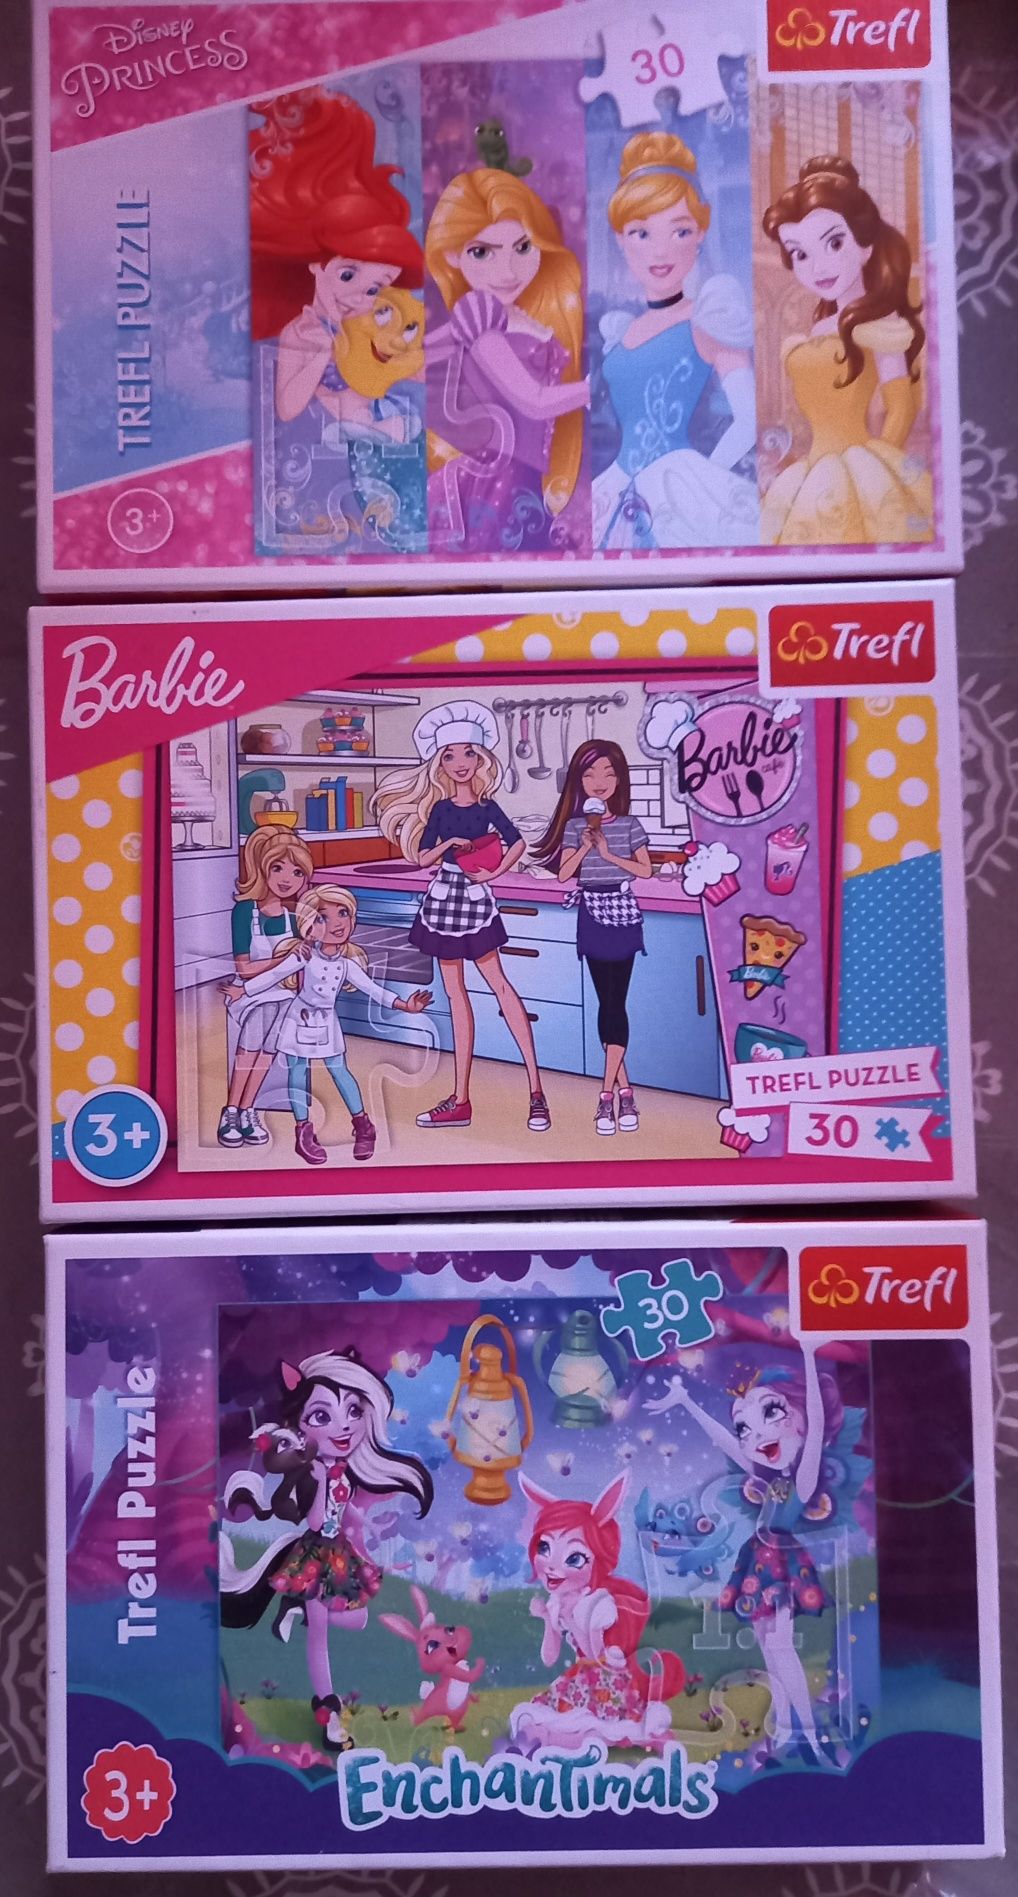 Puzzle Trefl 3+ (30 elementow, Princess, Barbie, EnchanTimals)